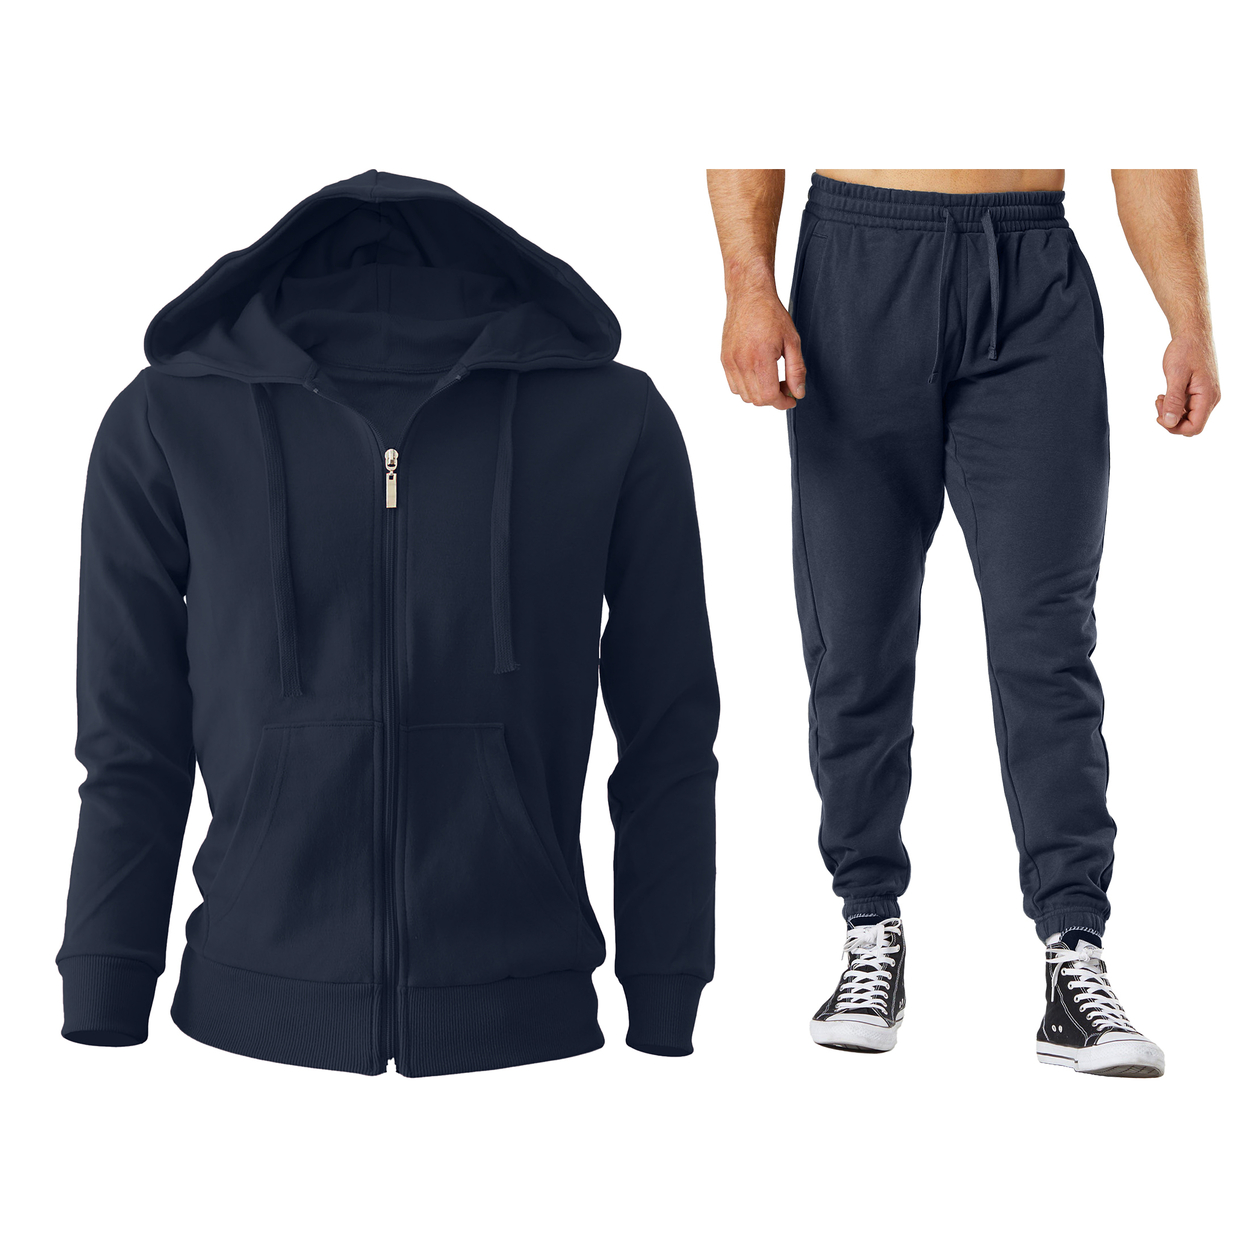 4-Piece: Men's Winter Warm Cozy Athletic Multi-Pockets BIG & TALL Sweatsuit Set - Black, 3xl